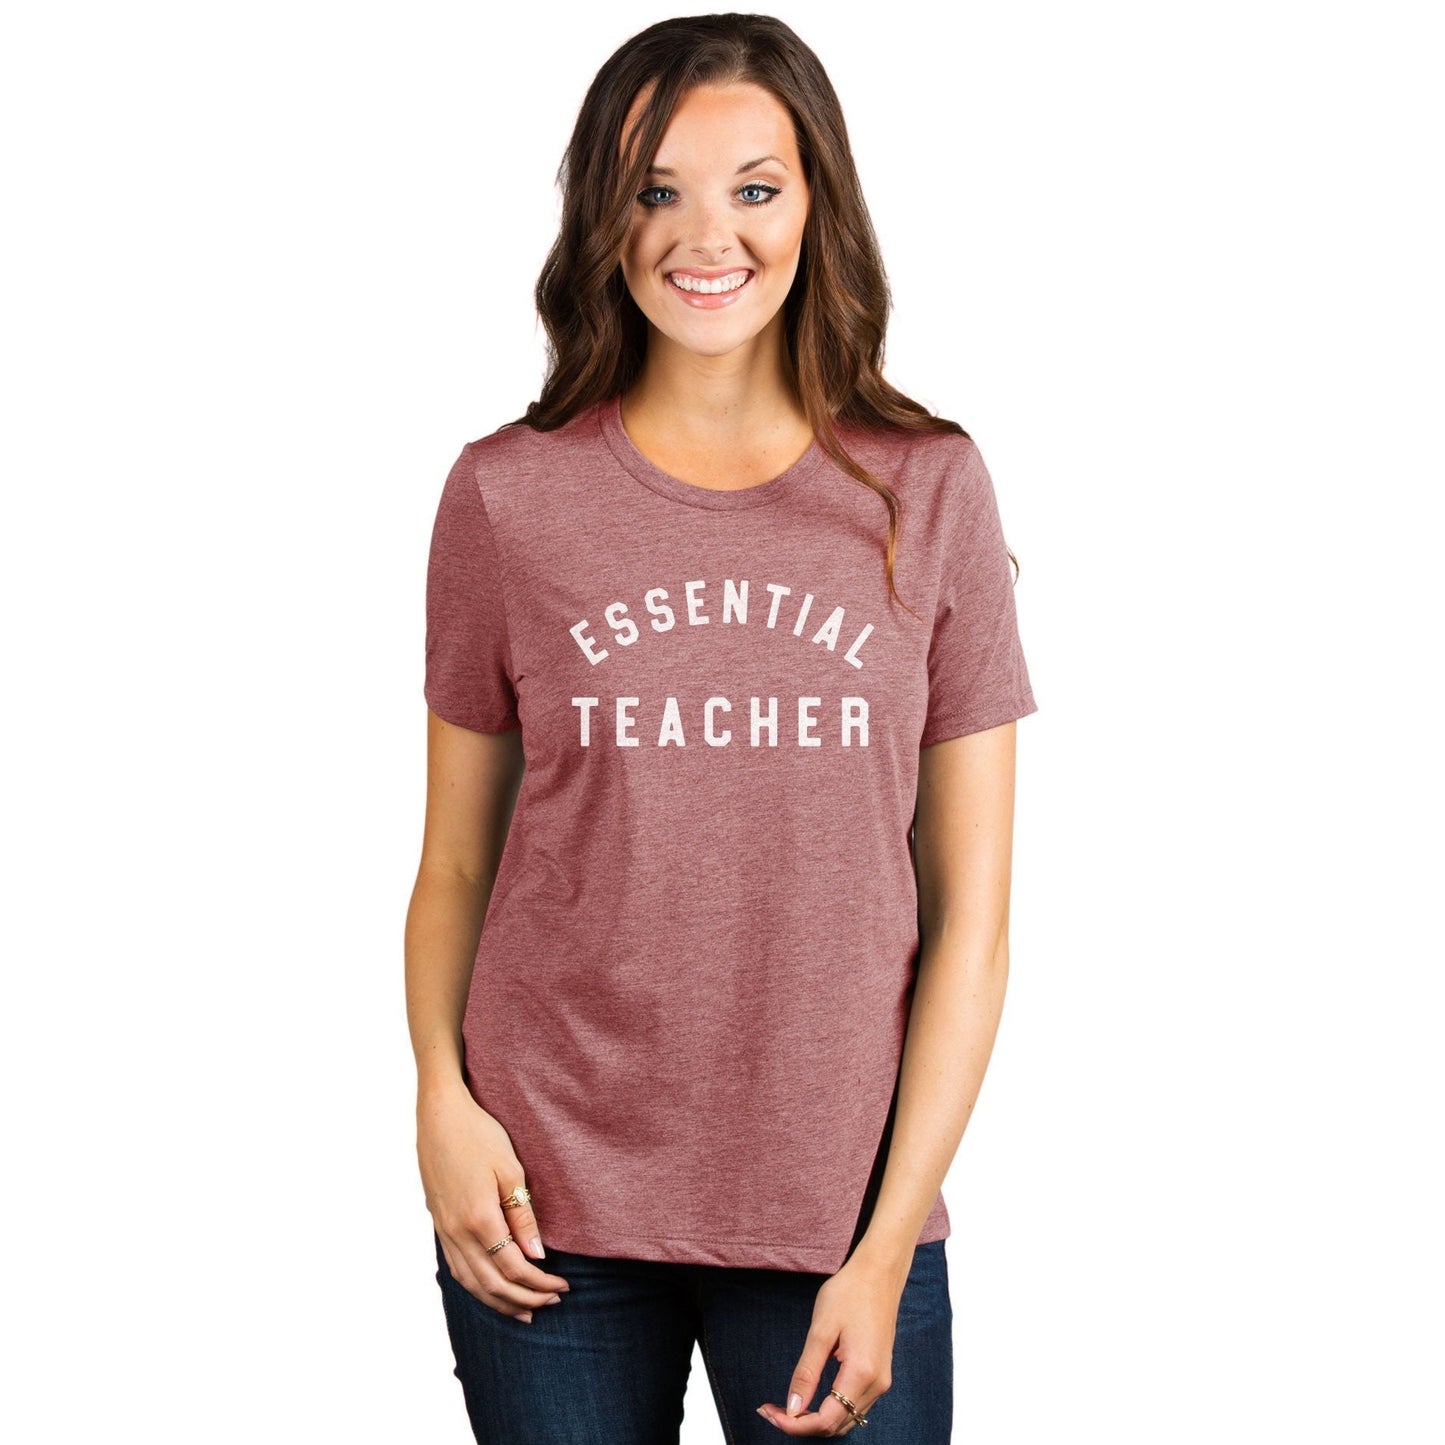 Essential Teacher Women's Relaxed Crewneck T-Shirt Top Tee Heather Rouge Model
